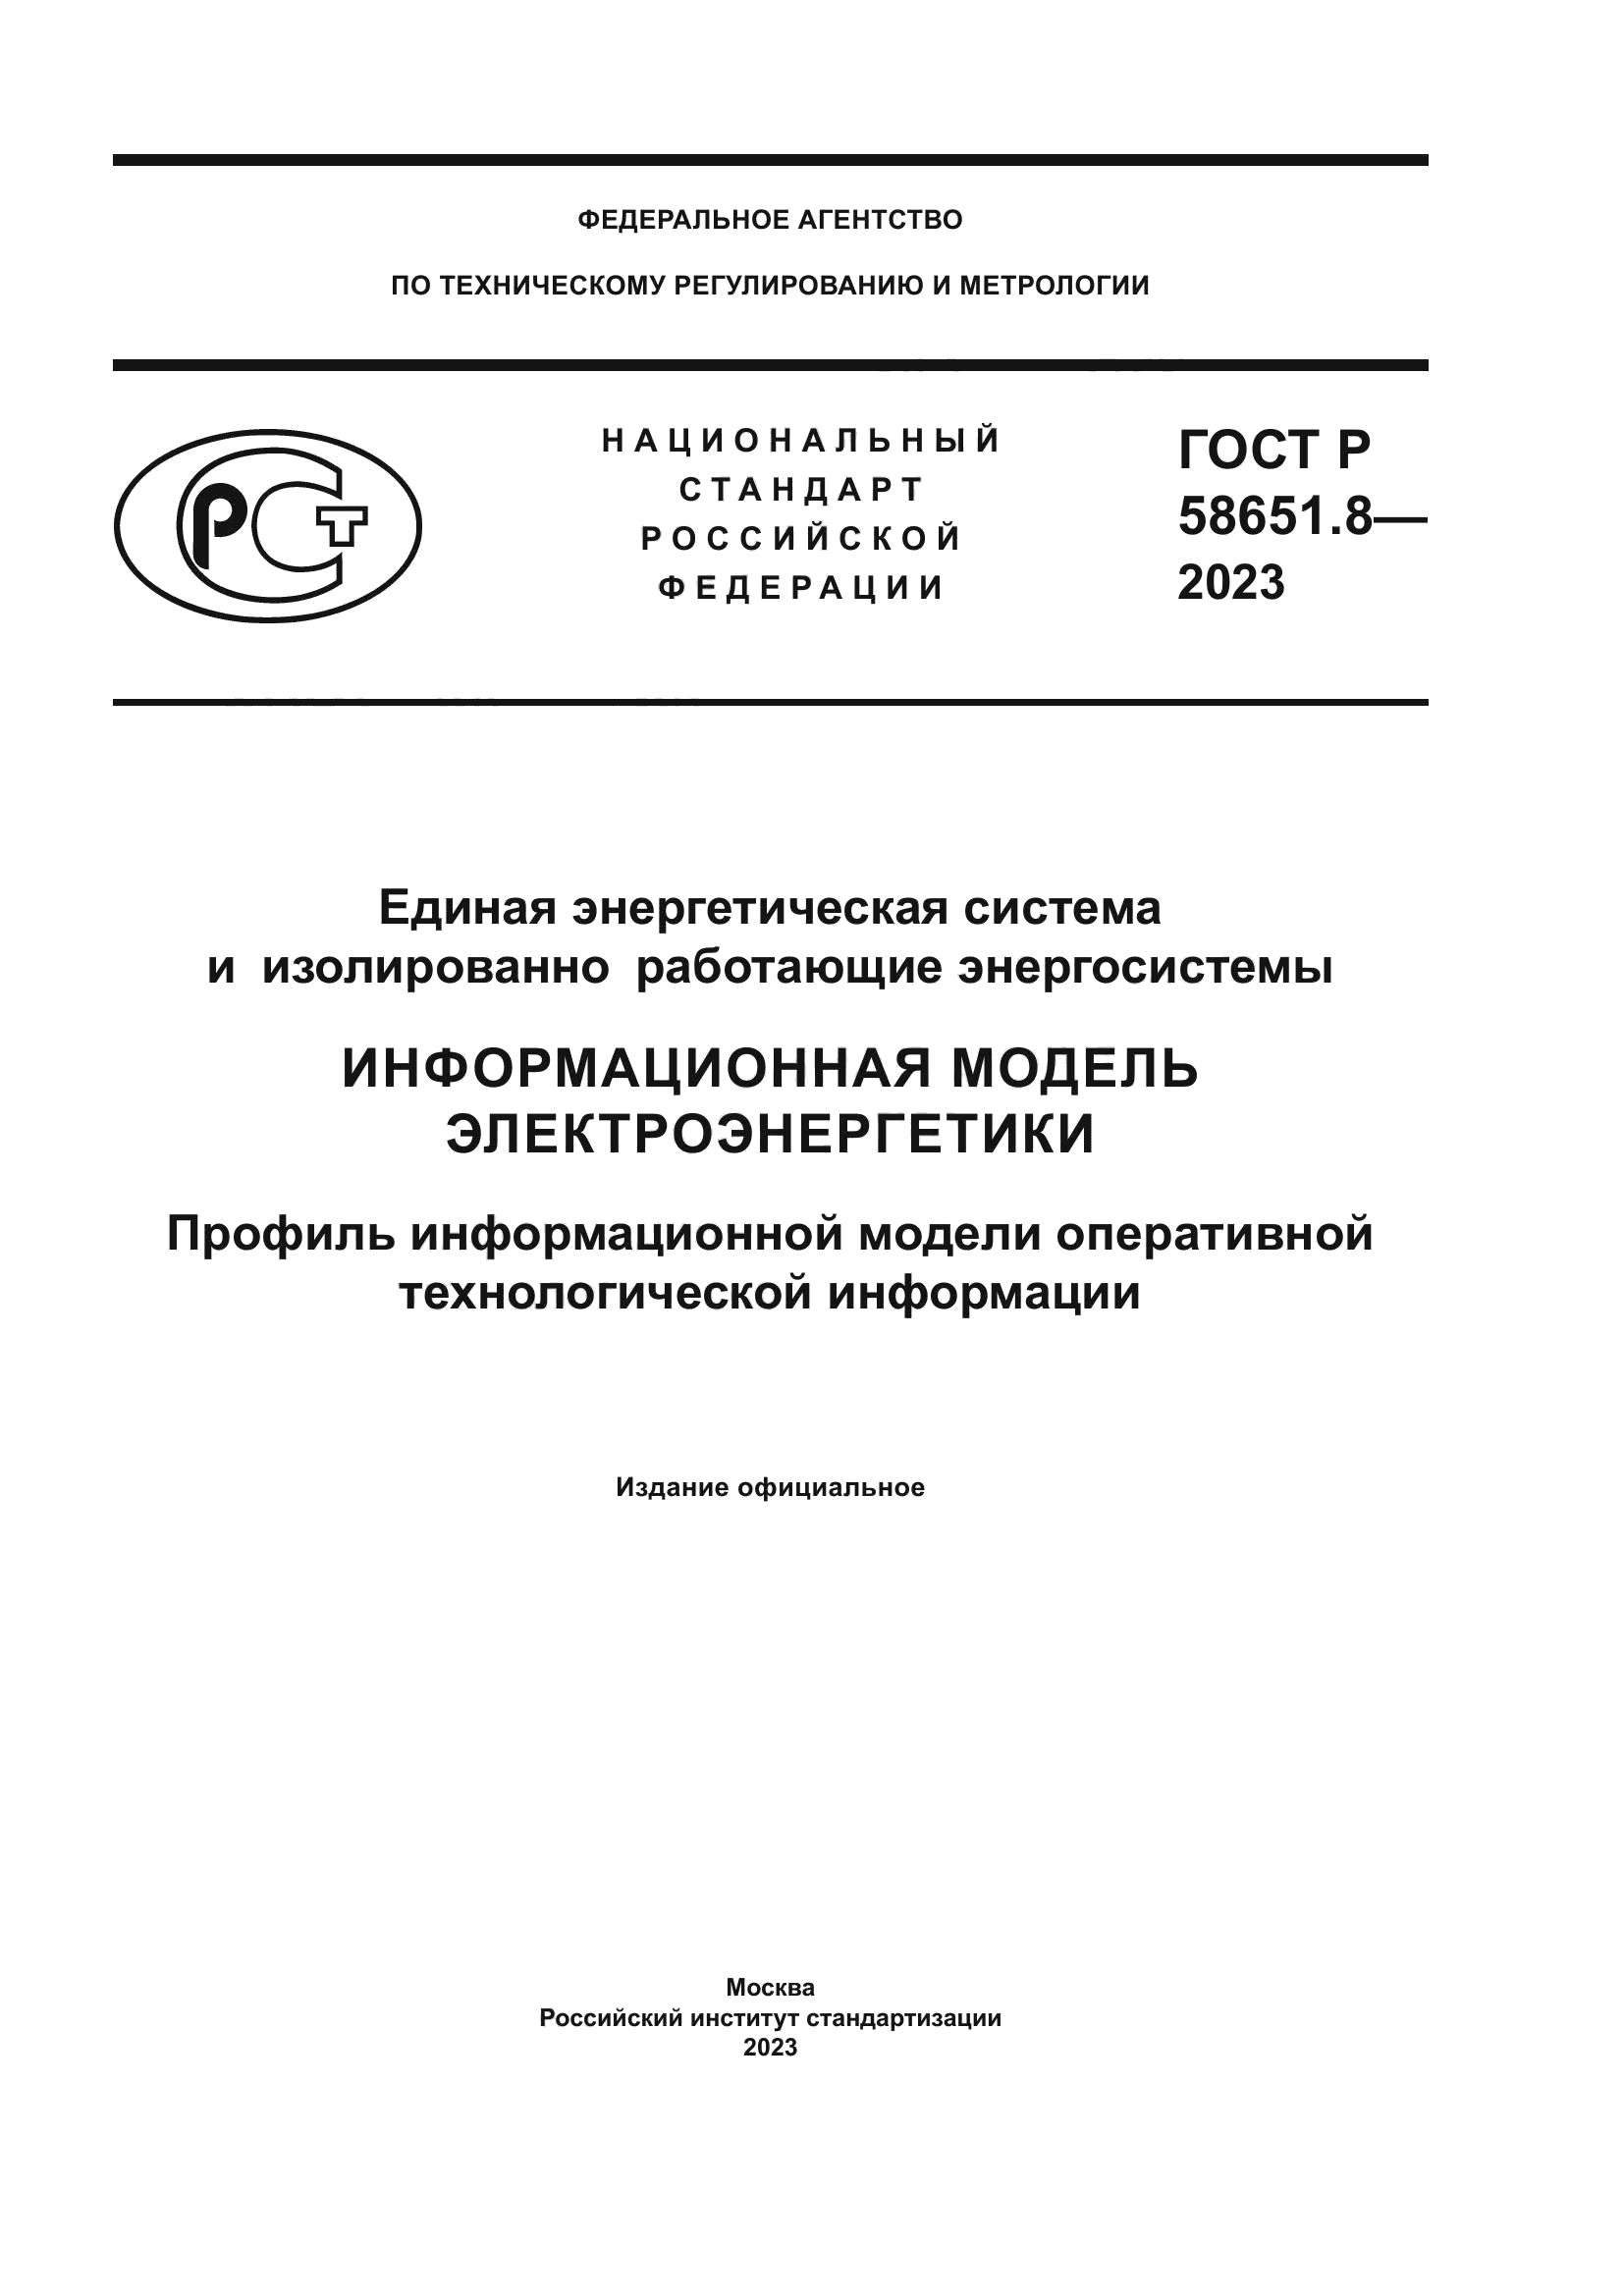 ГОСТ Р 58651.8-2023